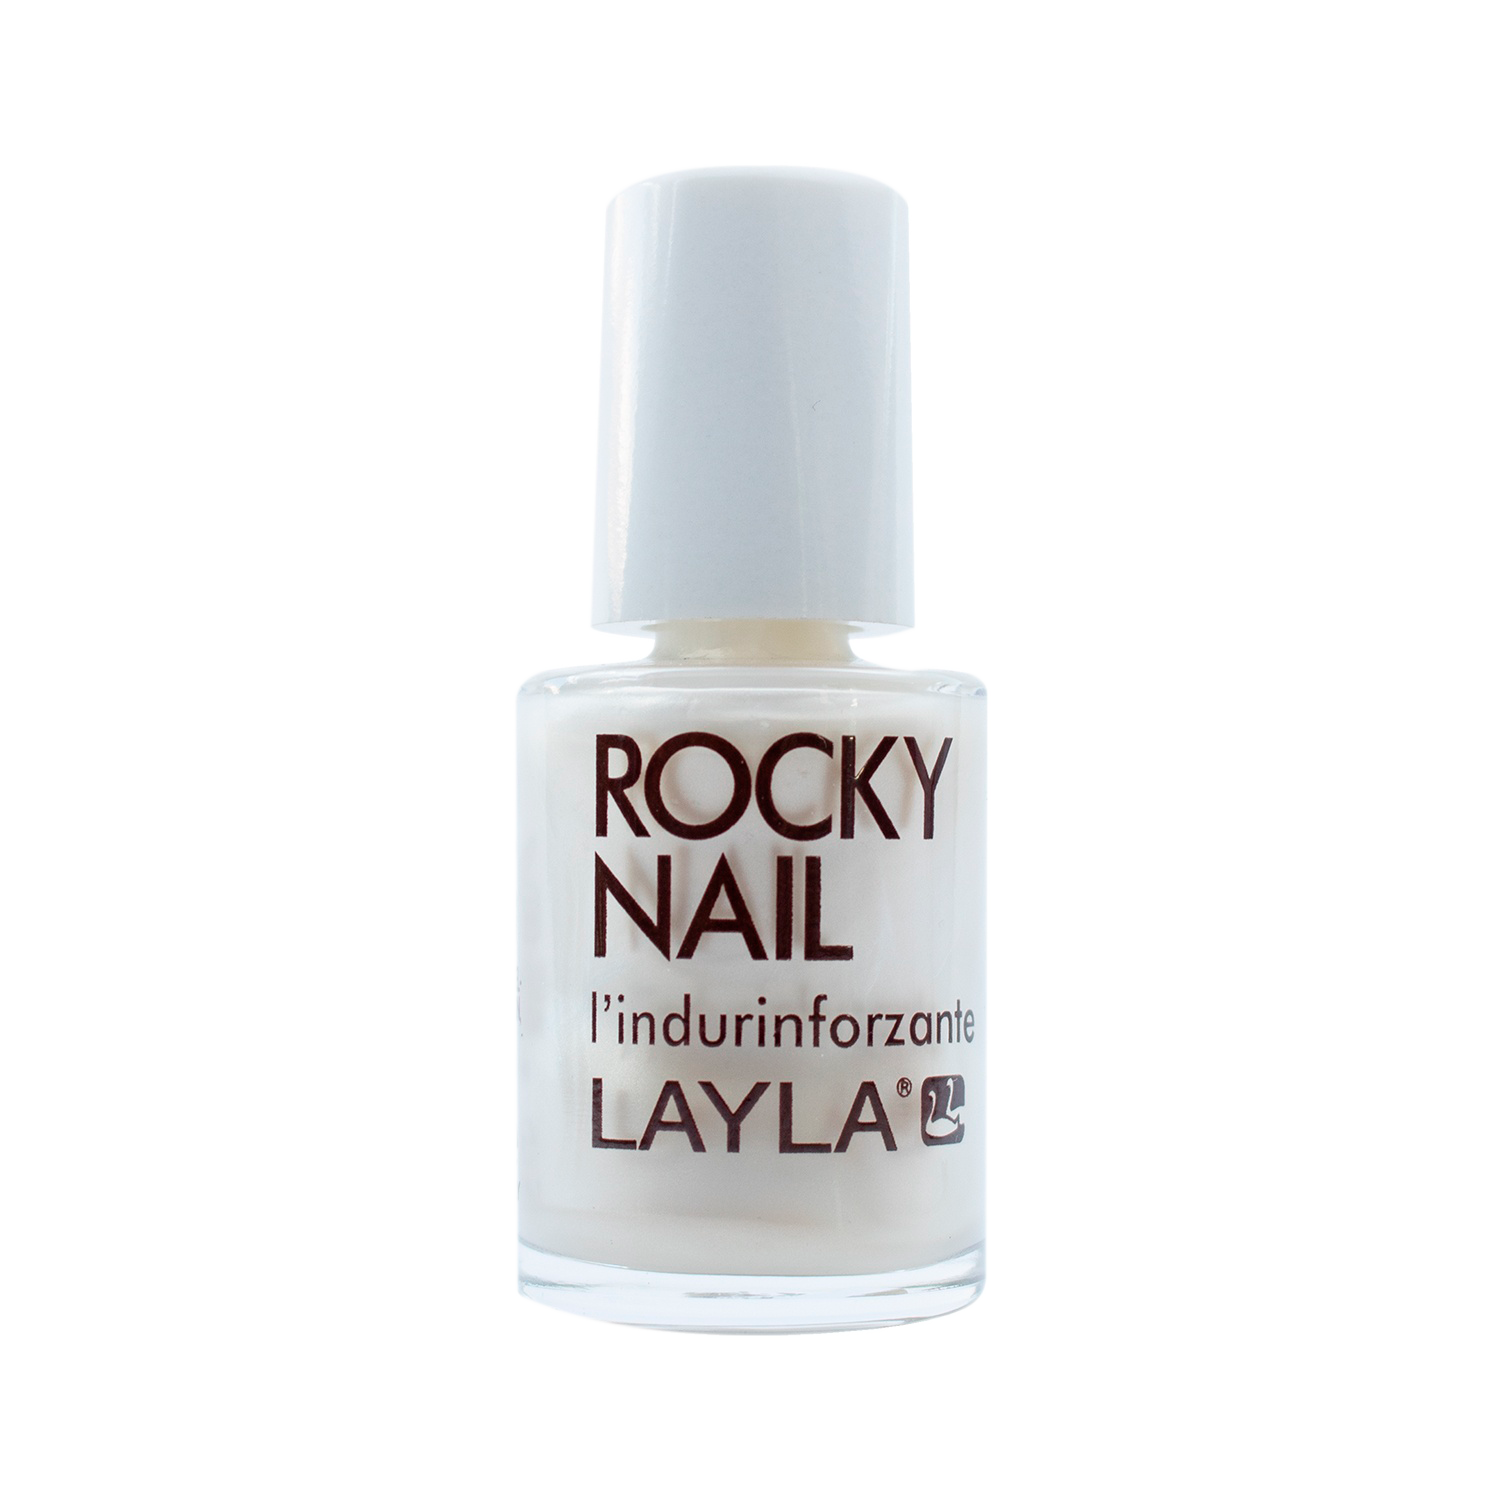 ROCKY NAIL - LAYLA Cosmetics